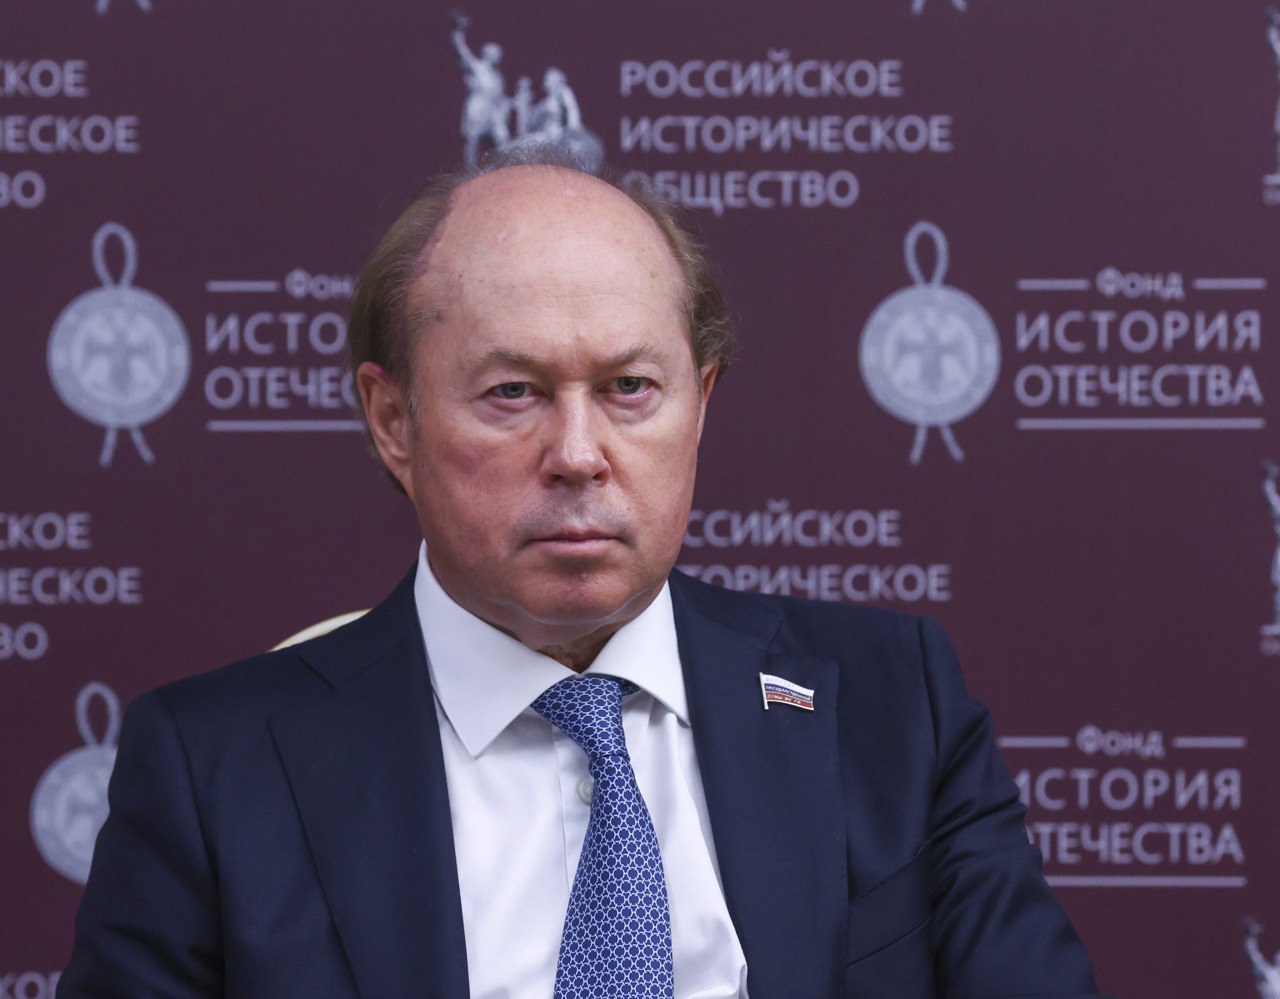 Минюст подтвердил полномочия Владимира Кононова как председателя ВОИР